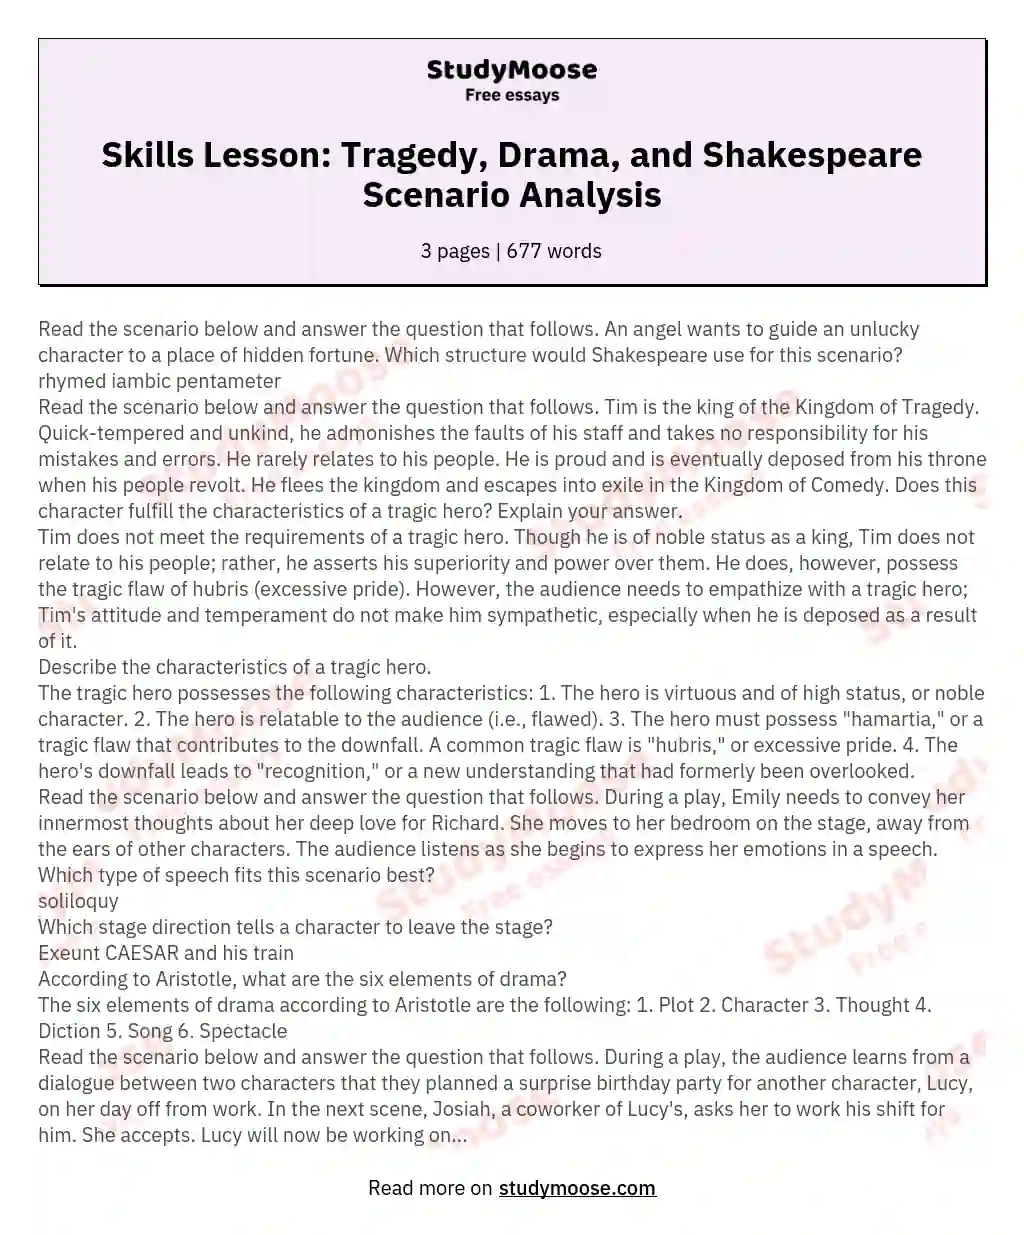 Skills Lesson: Tragedy, Drama, and Shakespeare Scenario Analysis essay